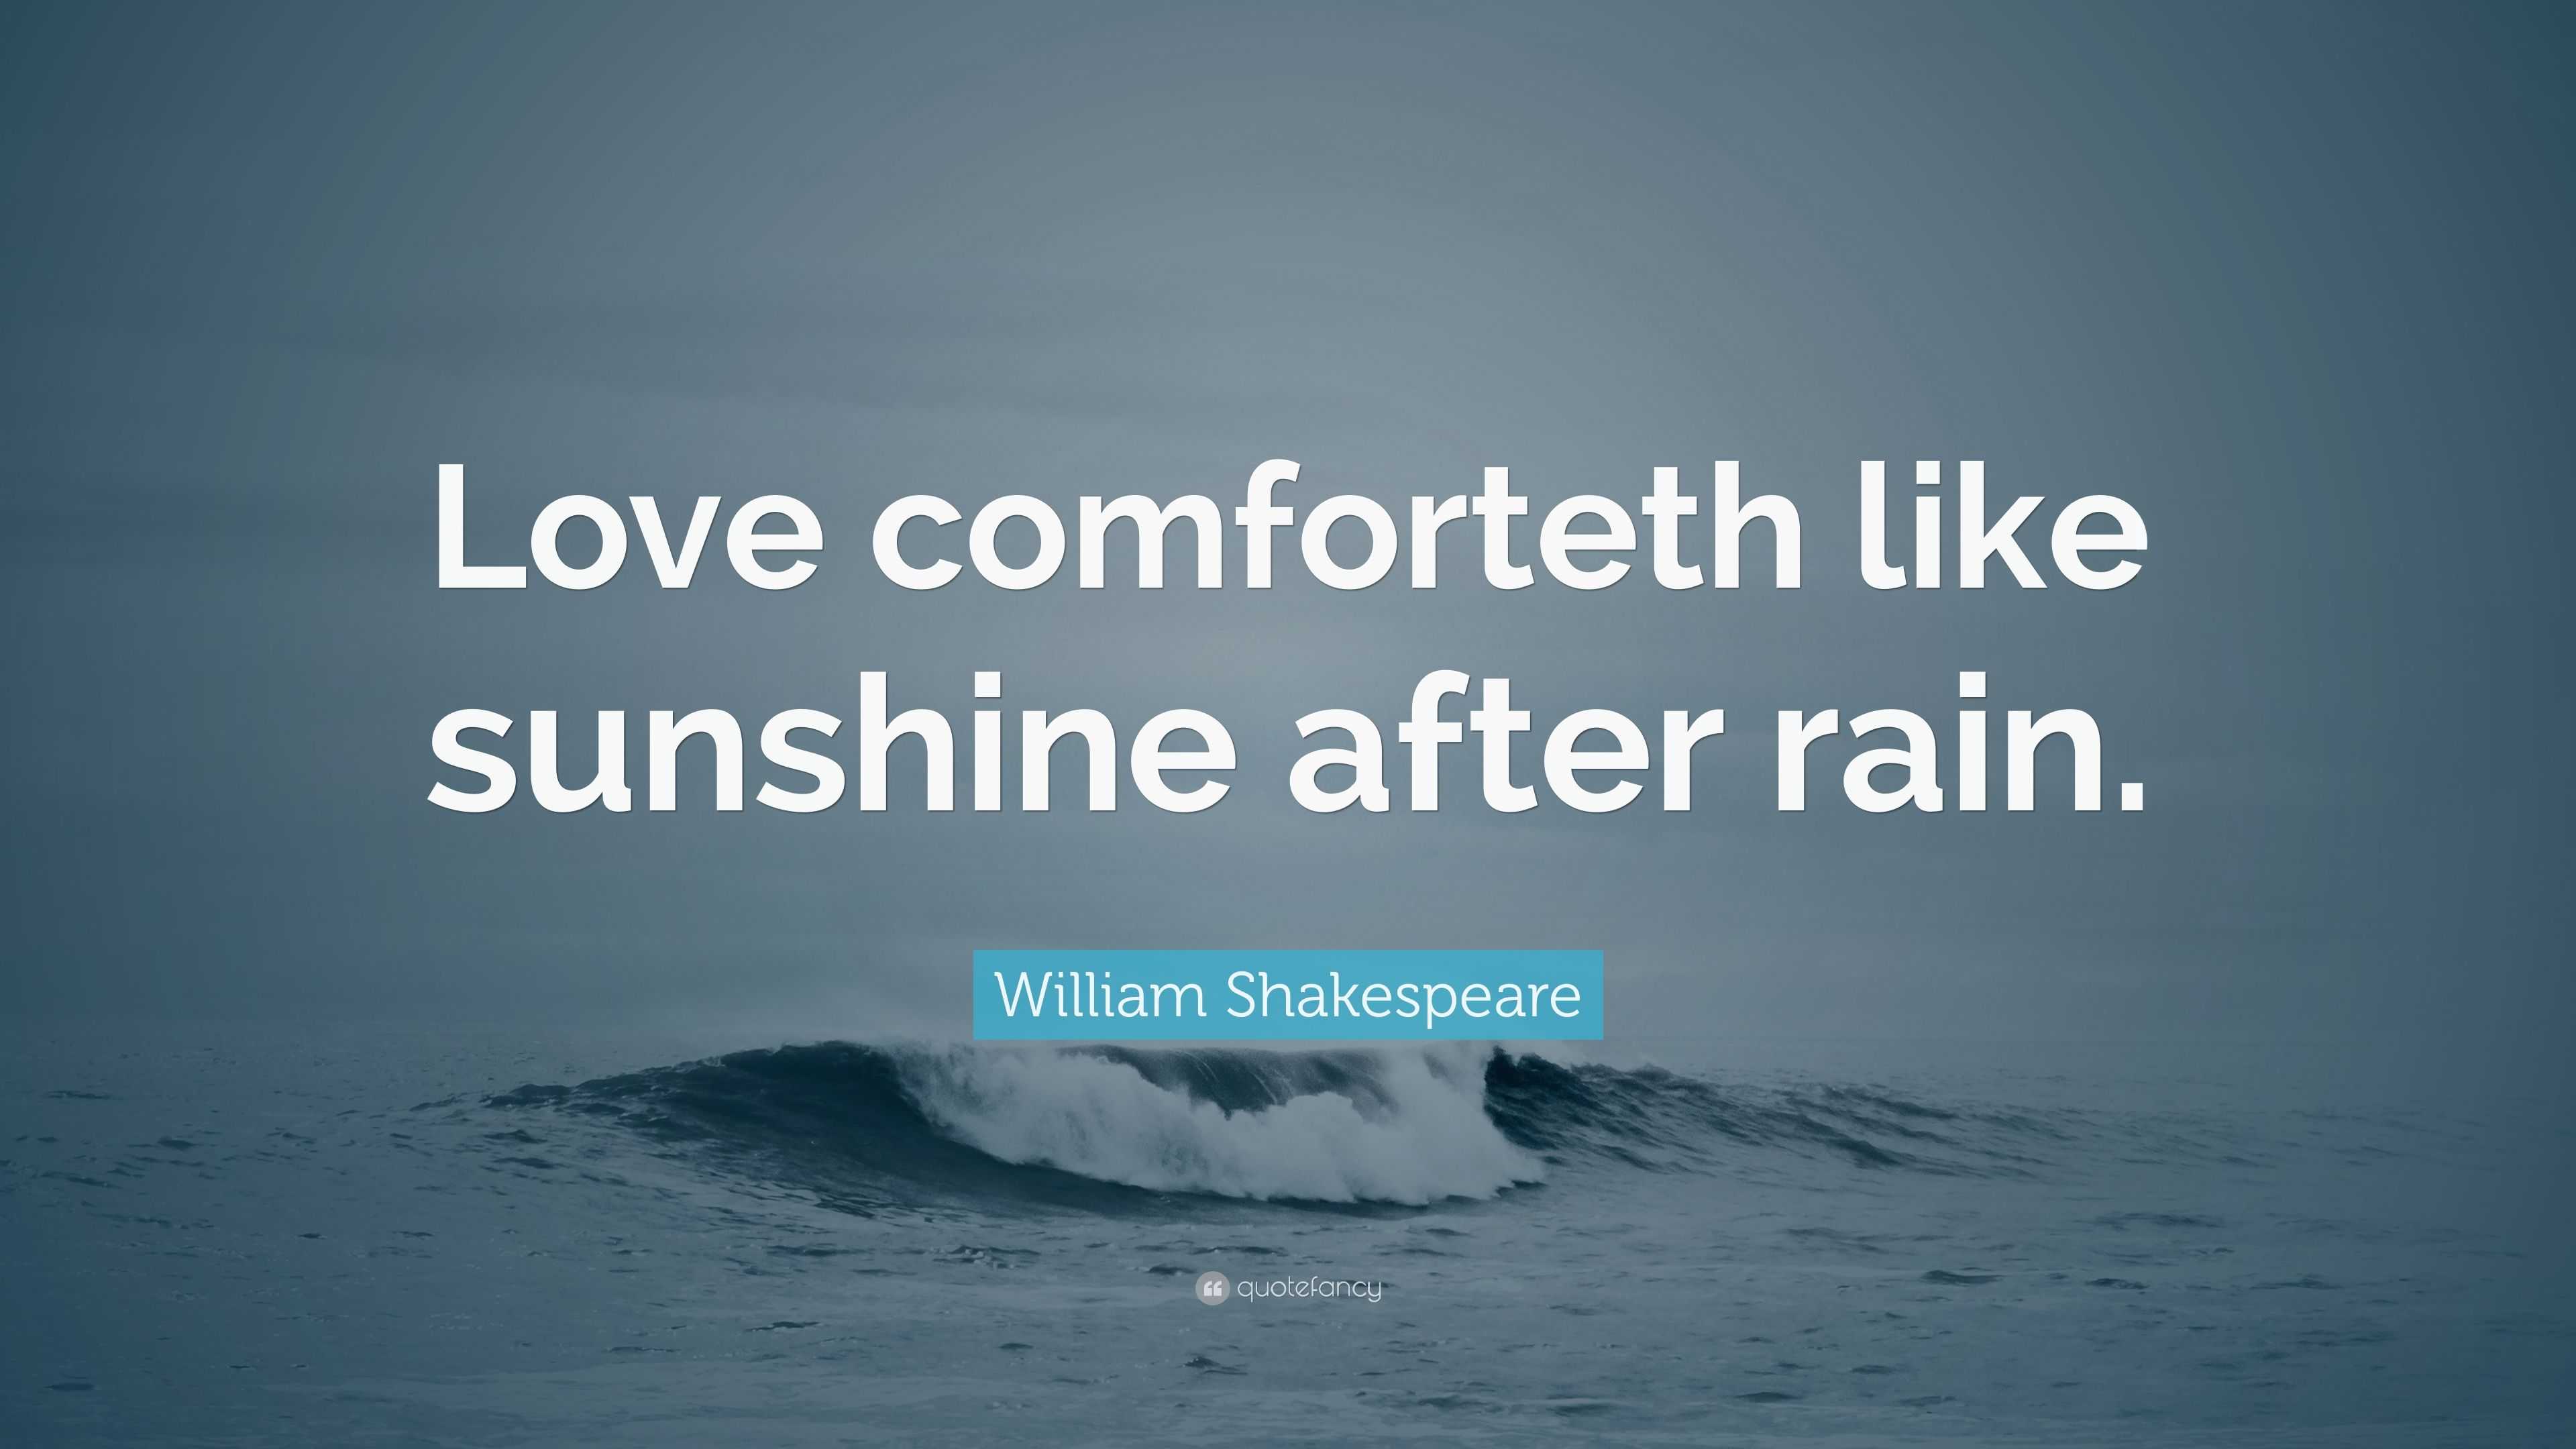 William Shakespeare Quote “Love forteth like sunshine after rain ”